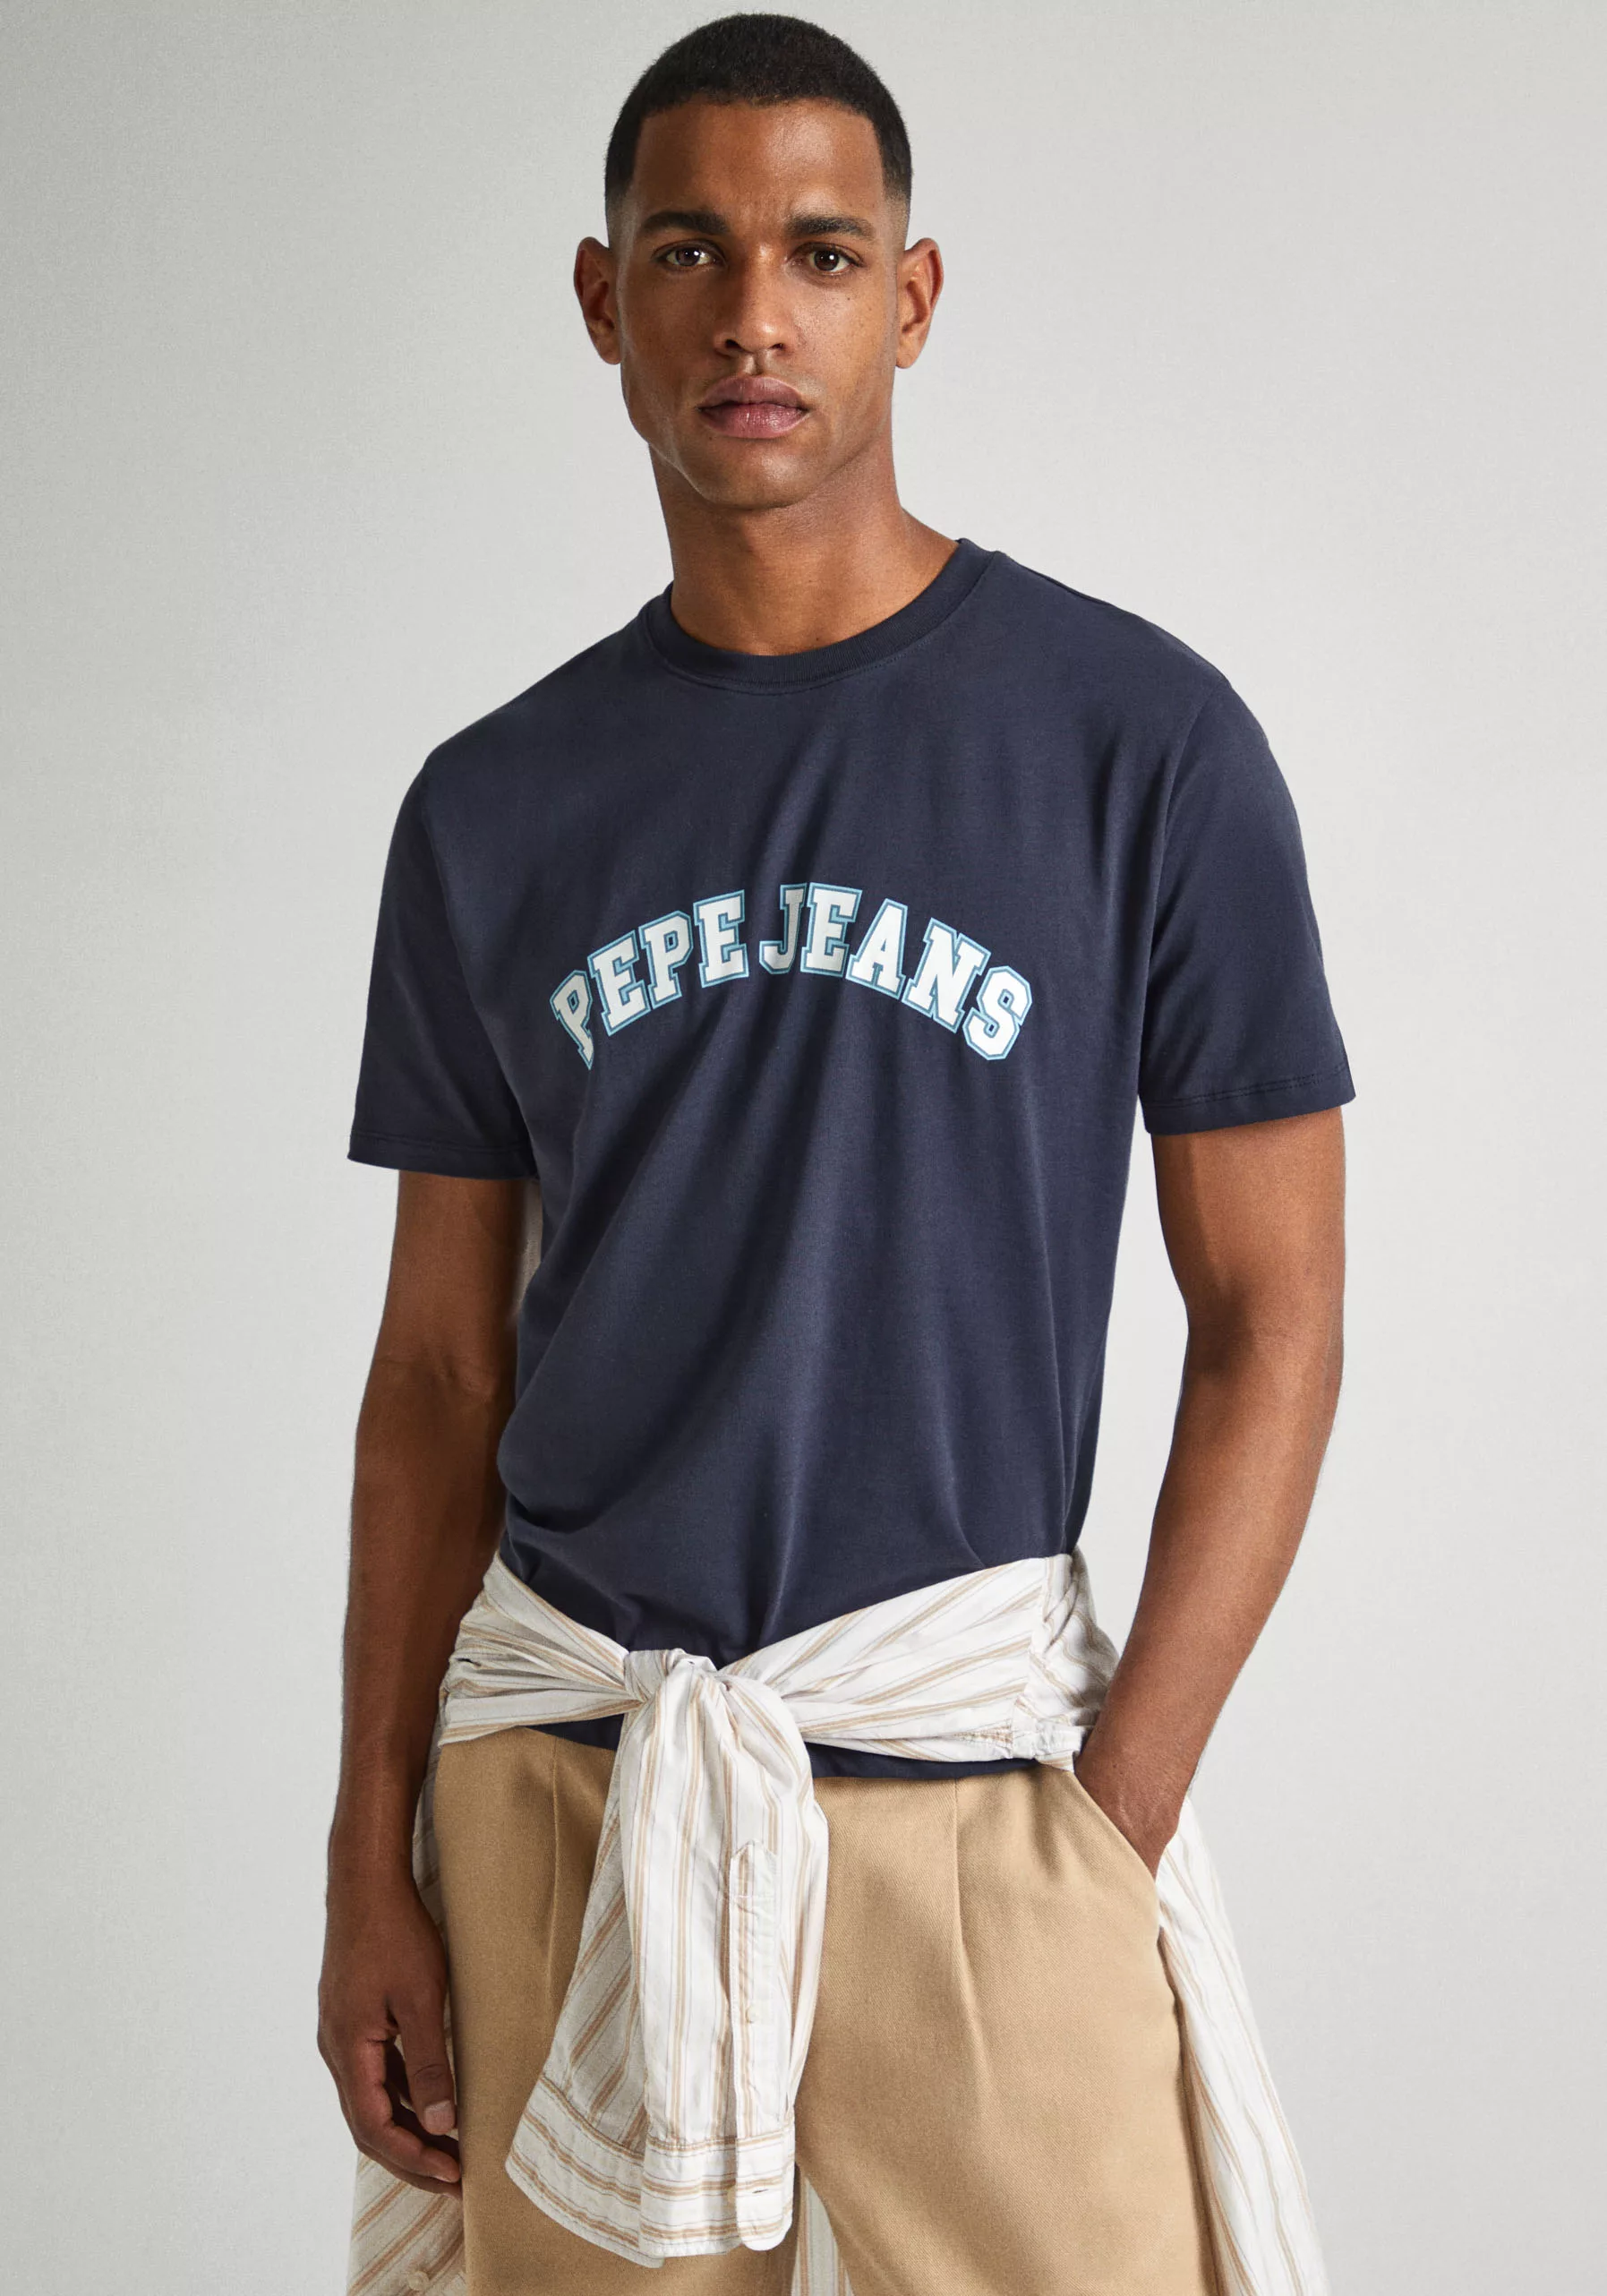 Pepe Jeans T-Shirt "CLEMENT" günstig online kaufen